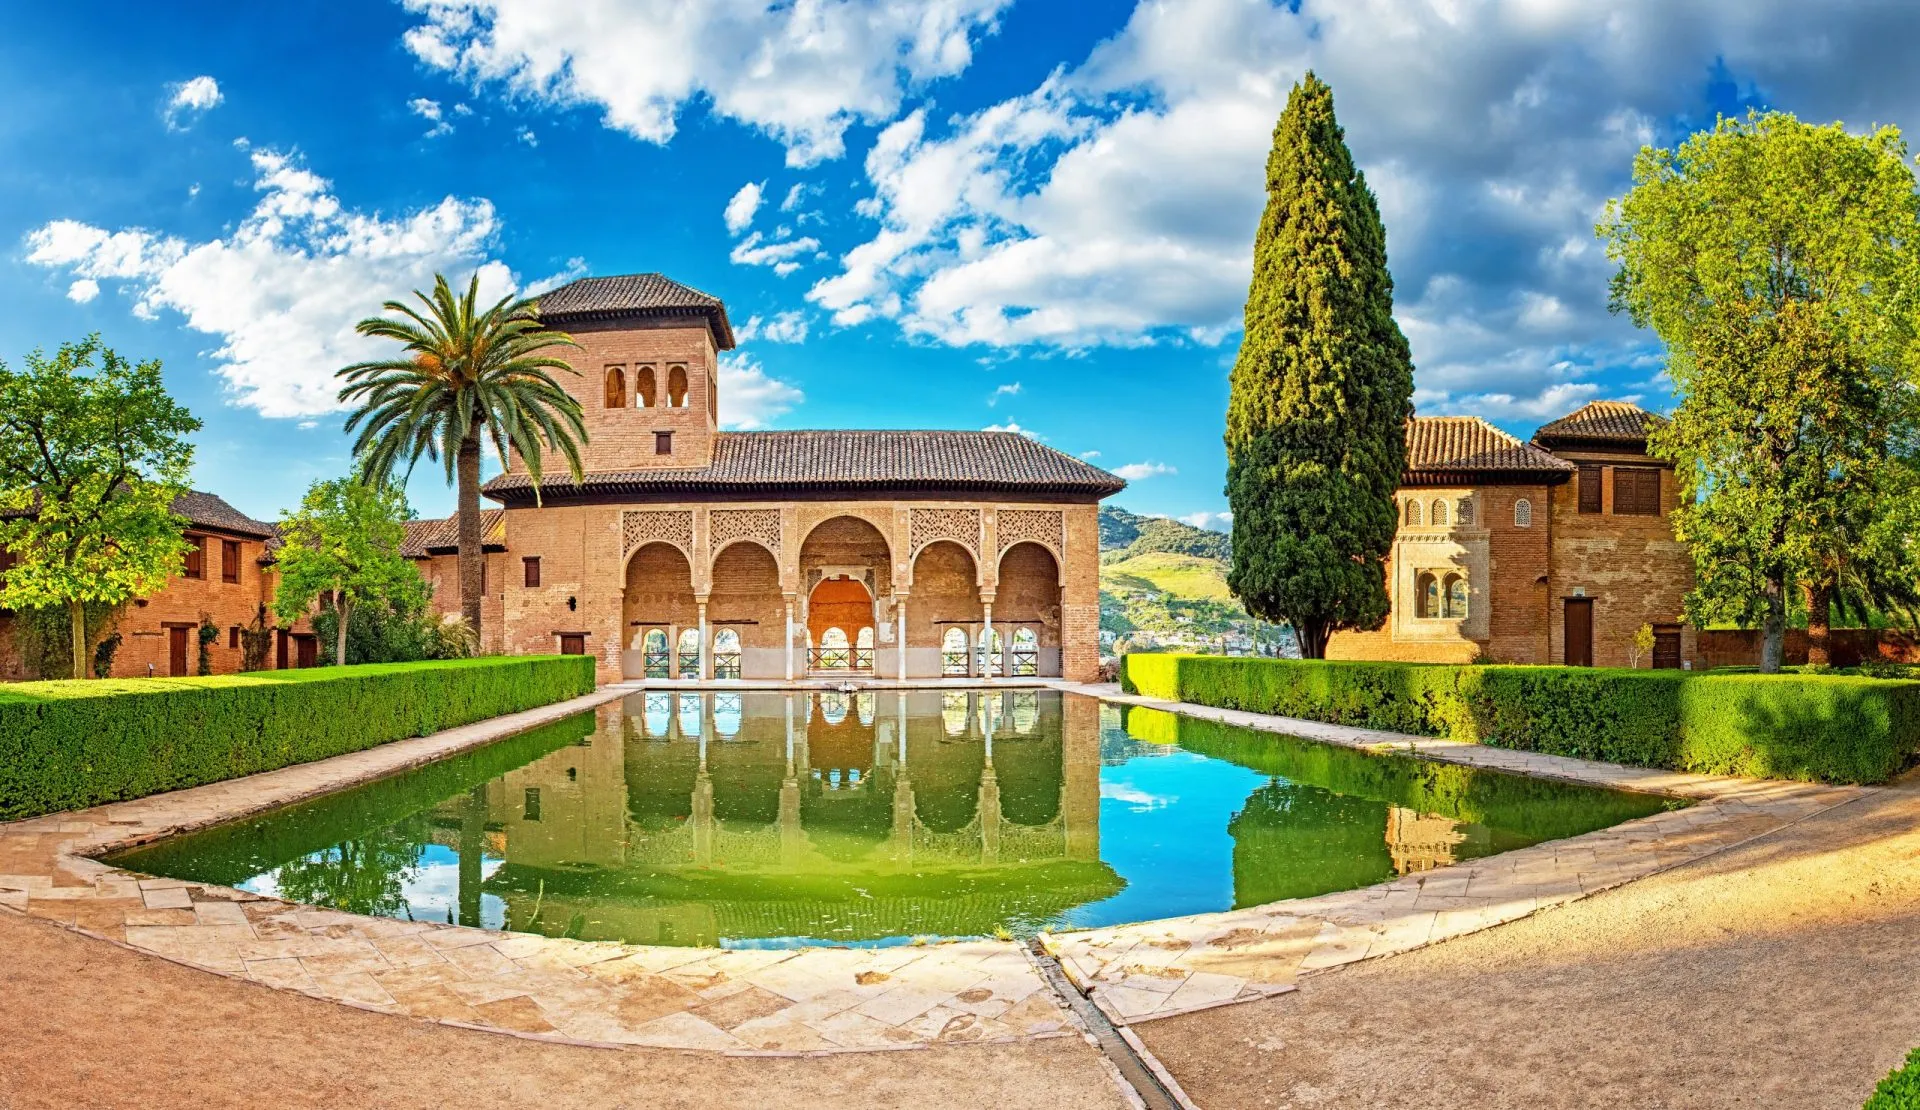 Palasset i det berømte Alhambra i Granada, Spania